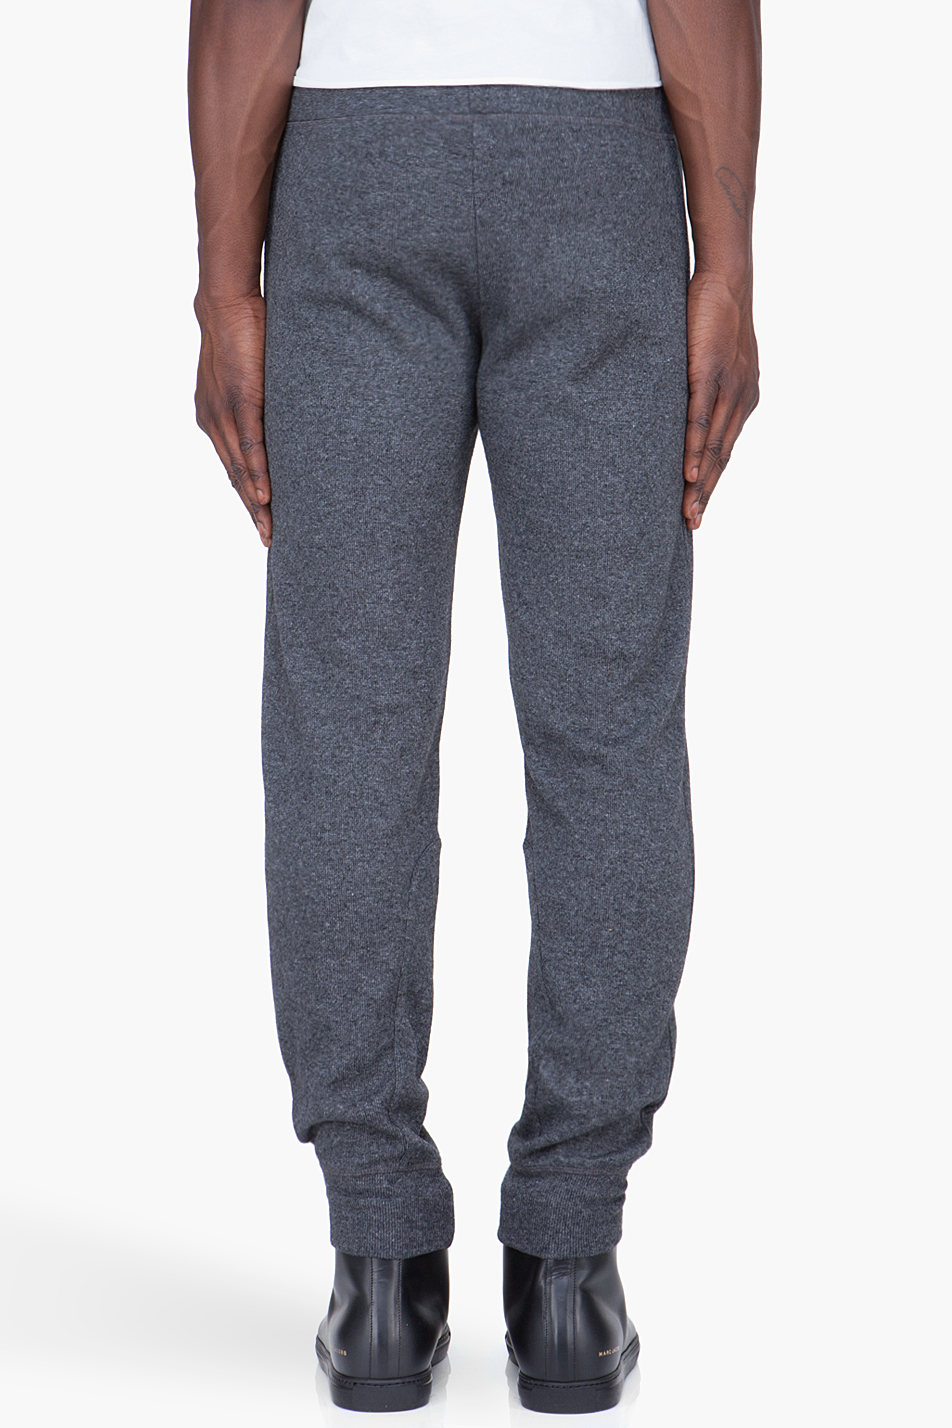 A.P.C. Charcoal Fleece Jogging Pants in Gray for Men - Lyst